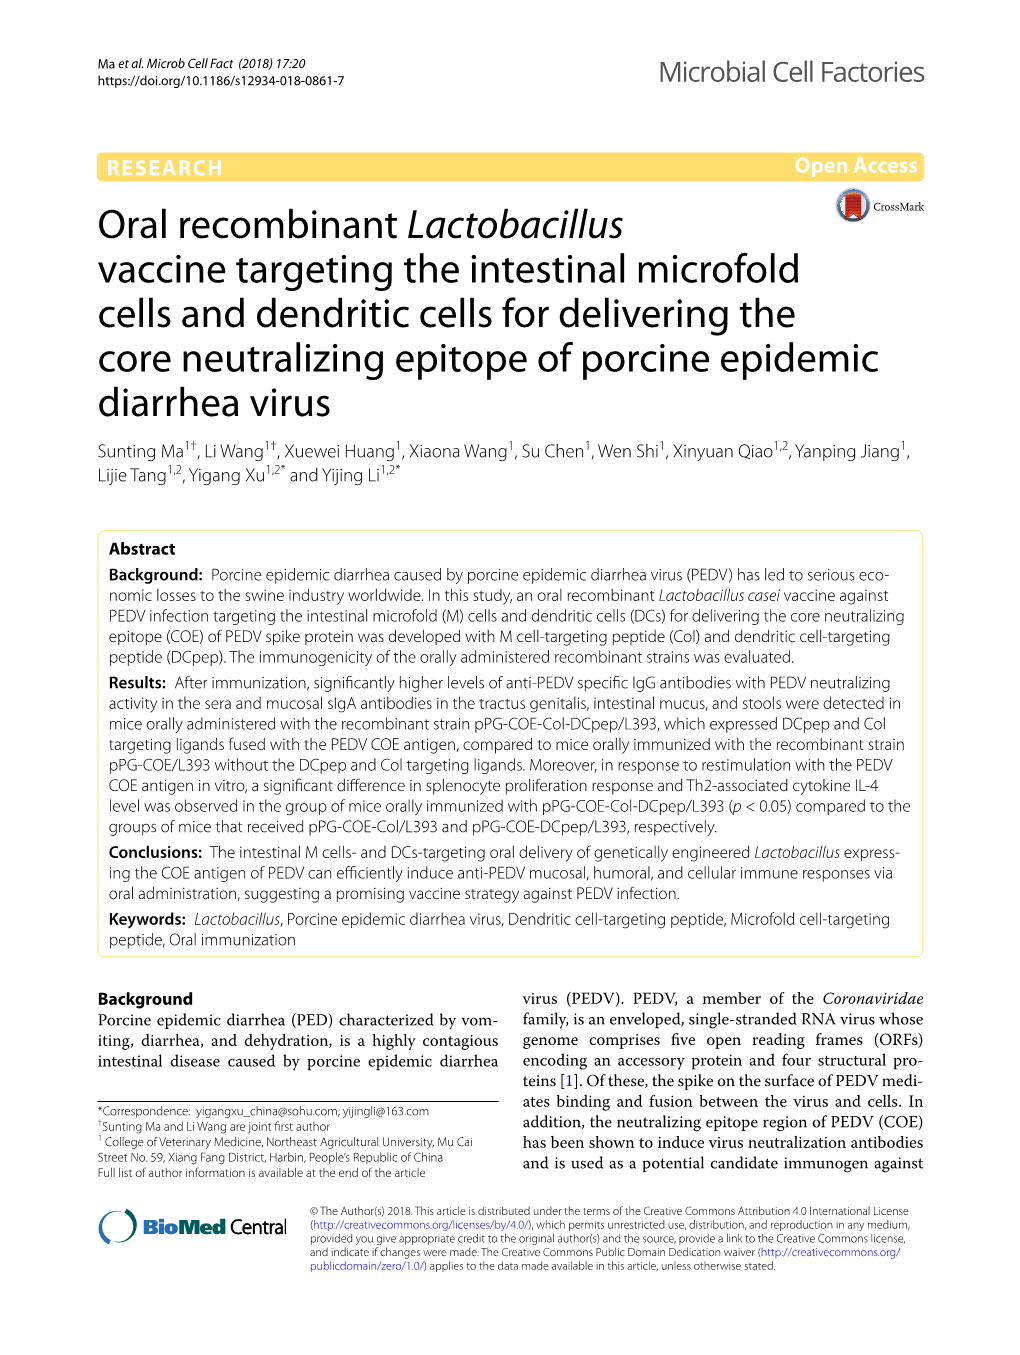 Oral Recombinant Lactobacillus Vaccine Targeting the Intestinal